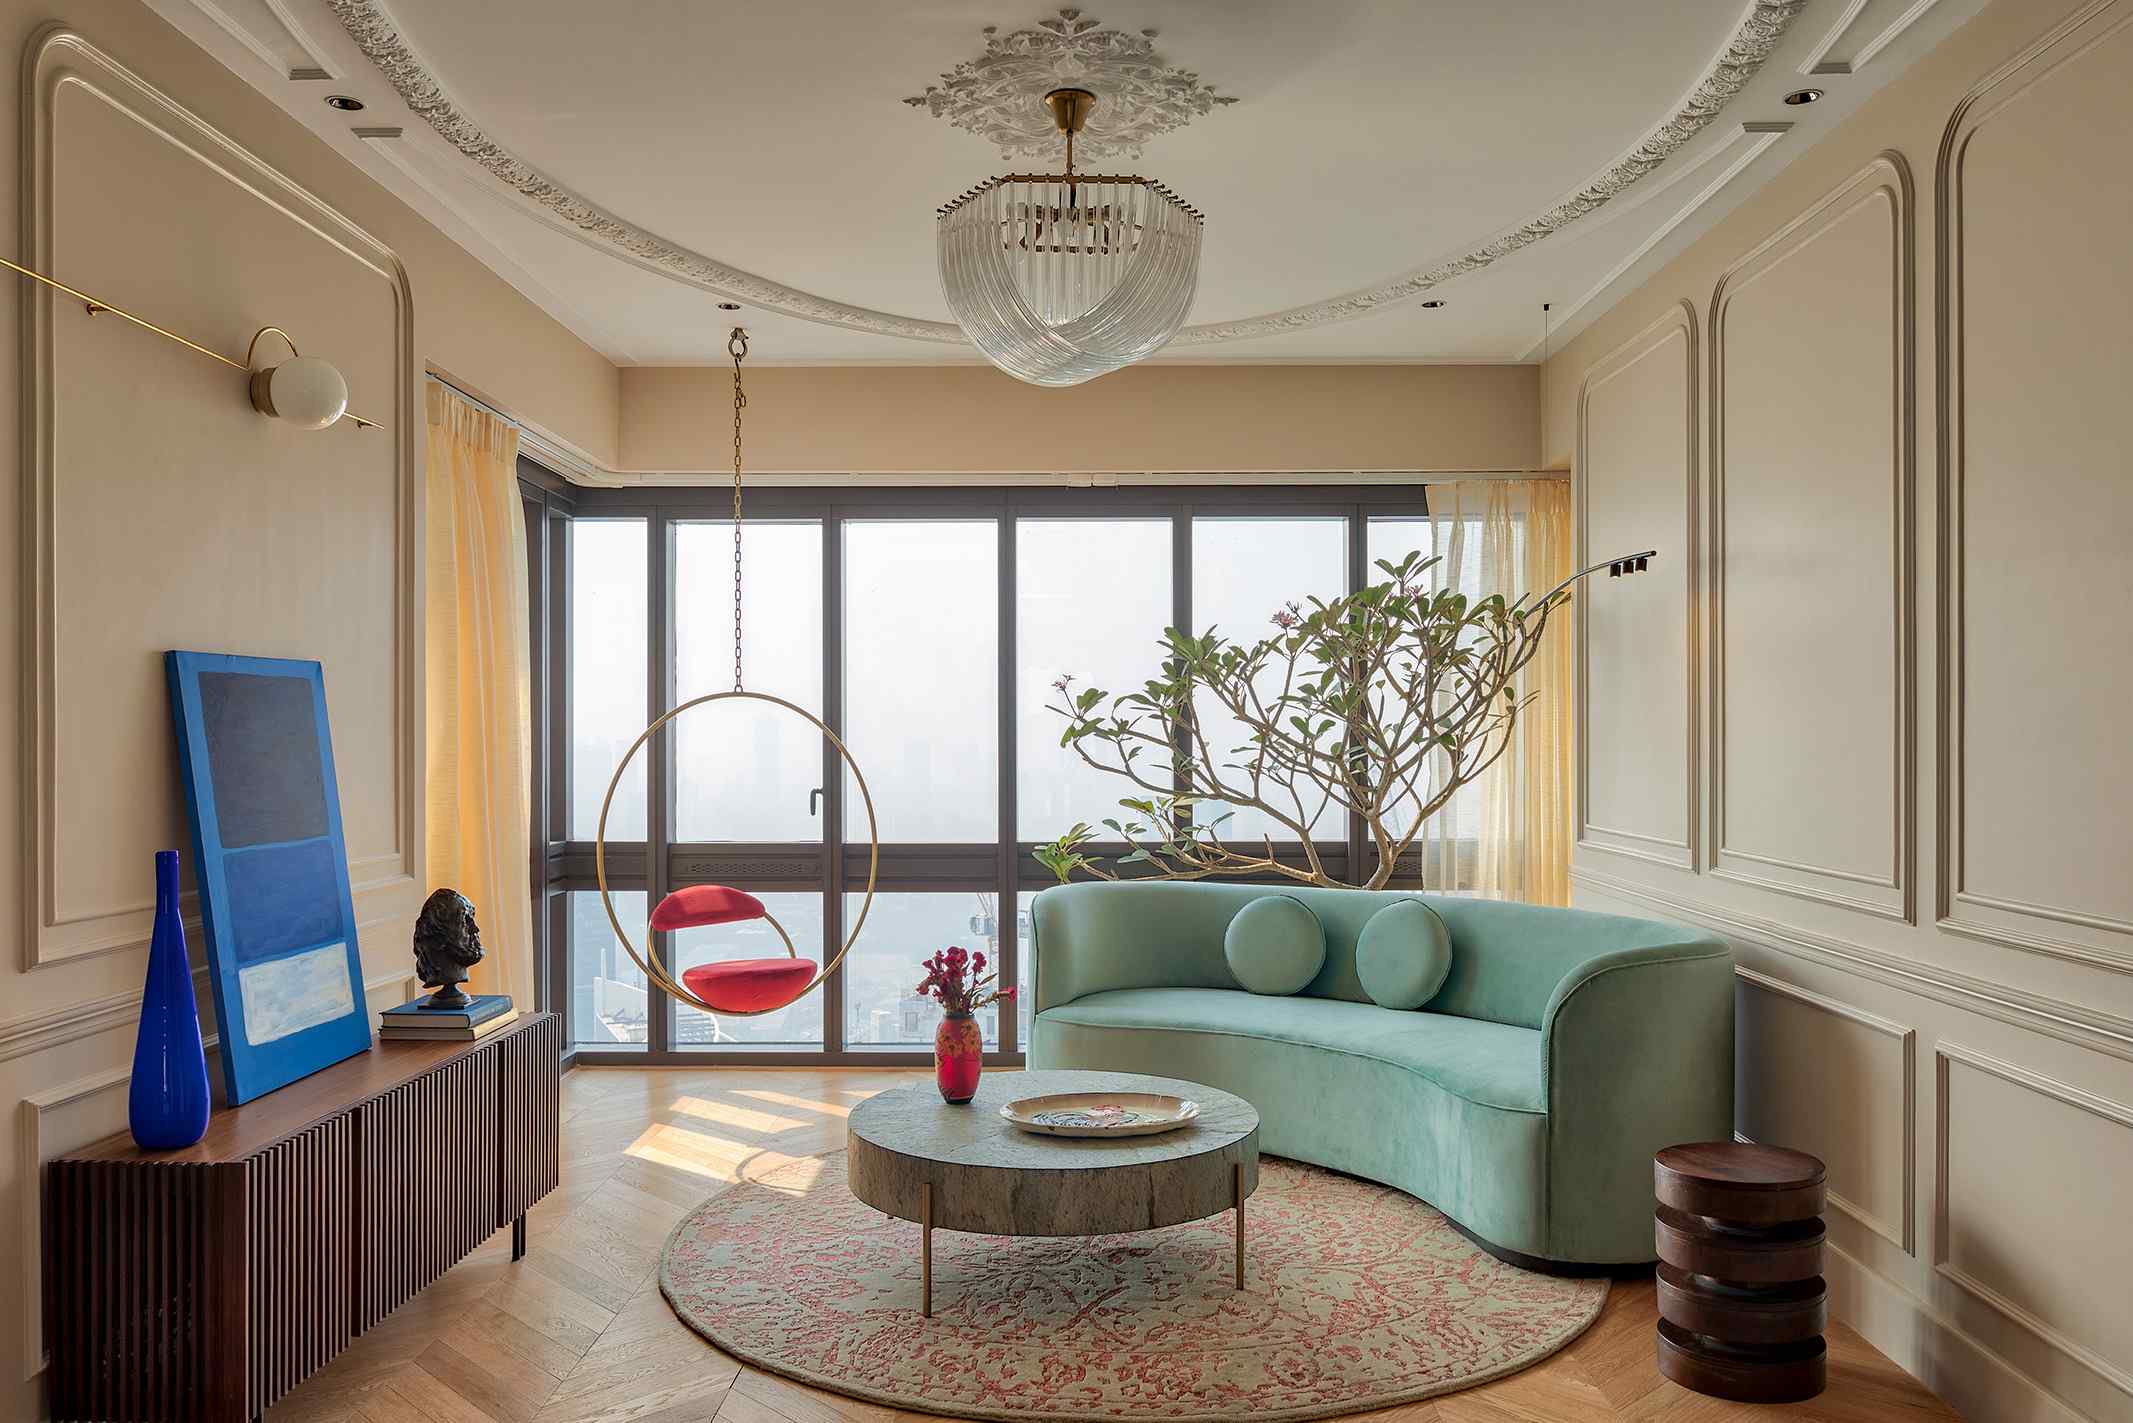 3 bhk flat interior design ideas for living room